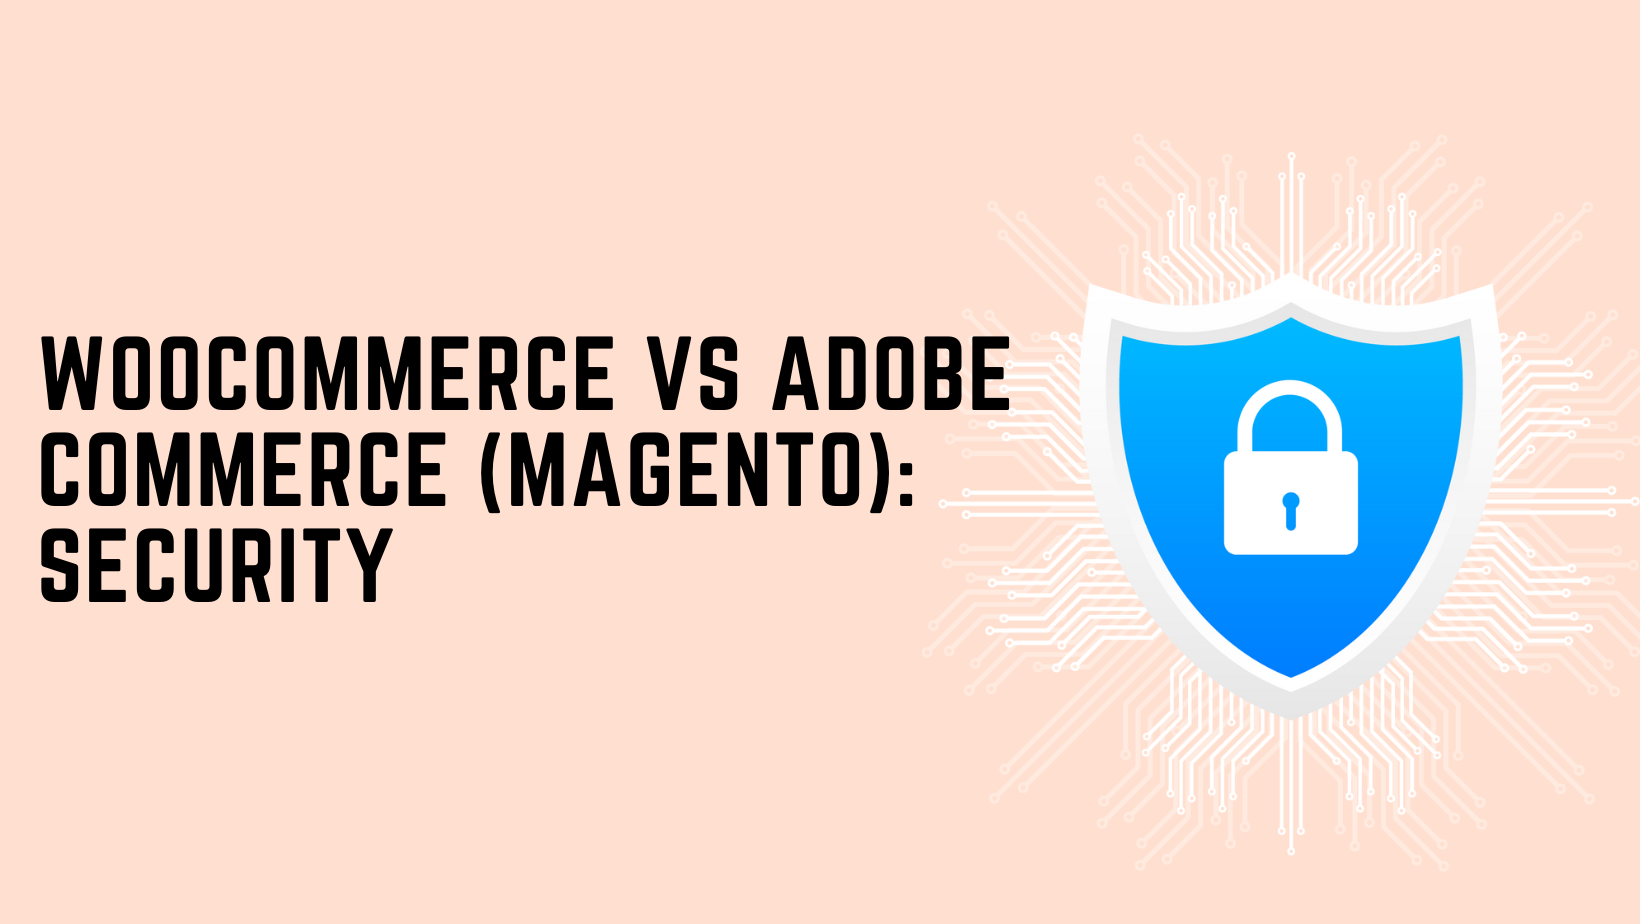 WooCommerce vs Adobe Commerce (Magento) Security